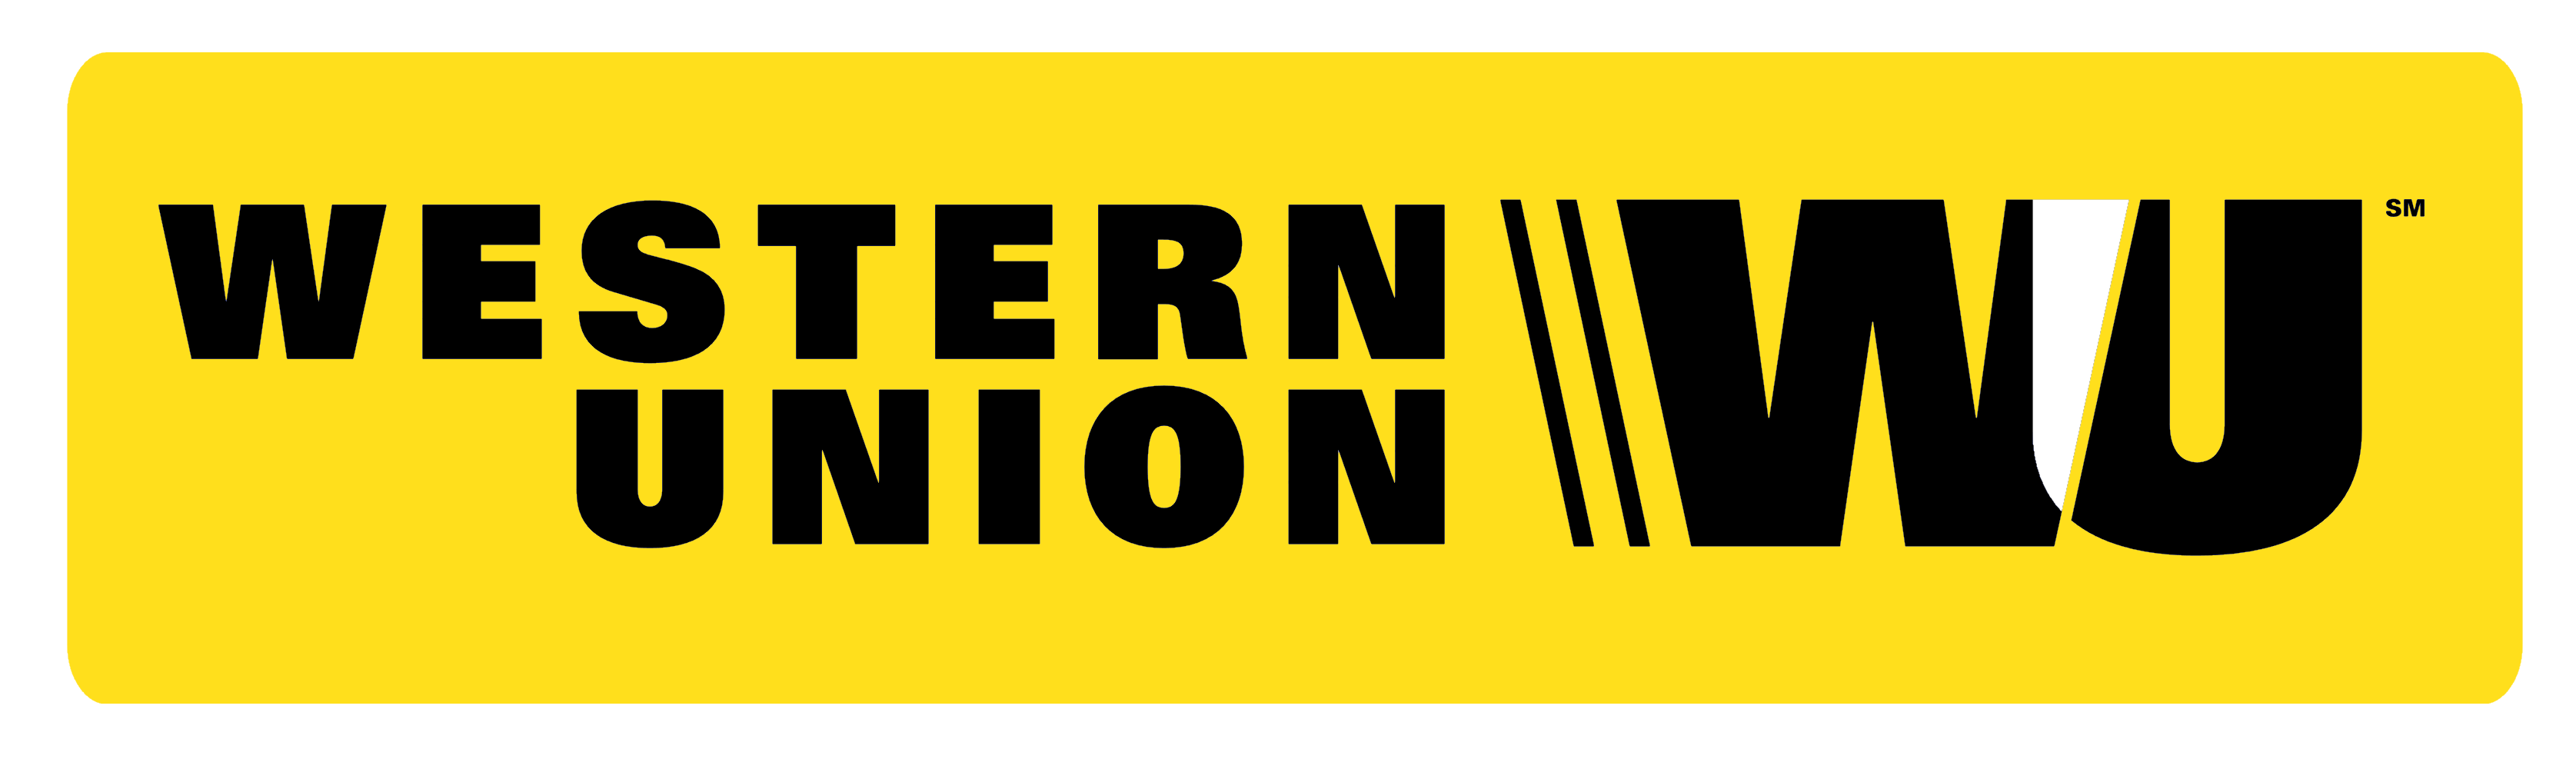 Westernunion Logo - Western Union – Logos, brands and logotypes